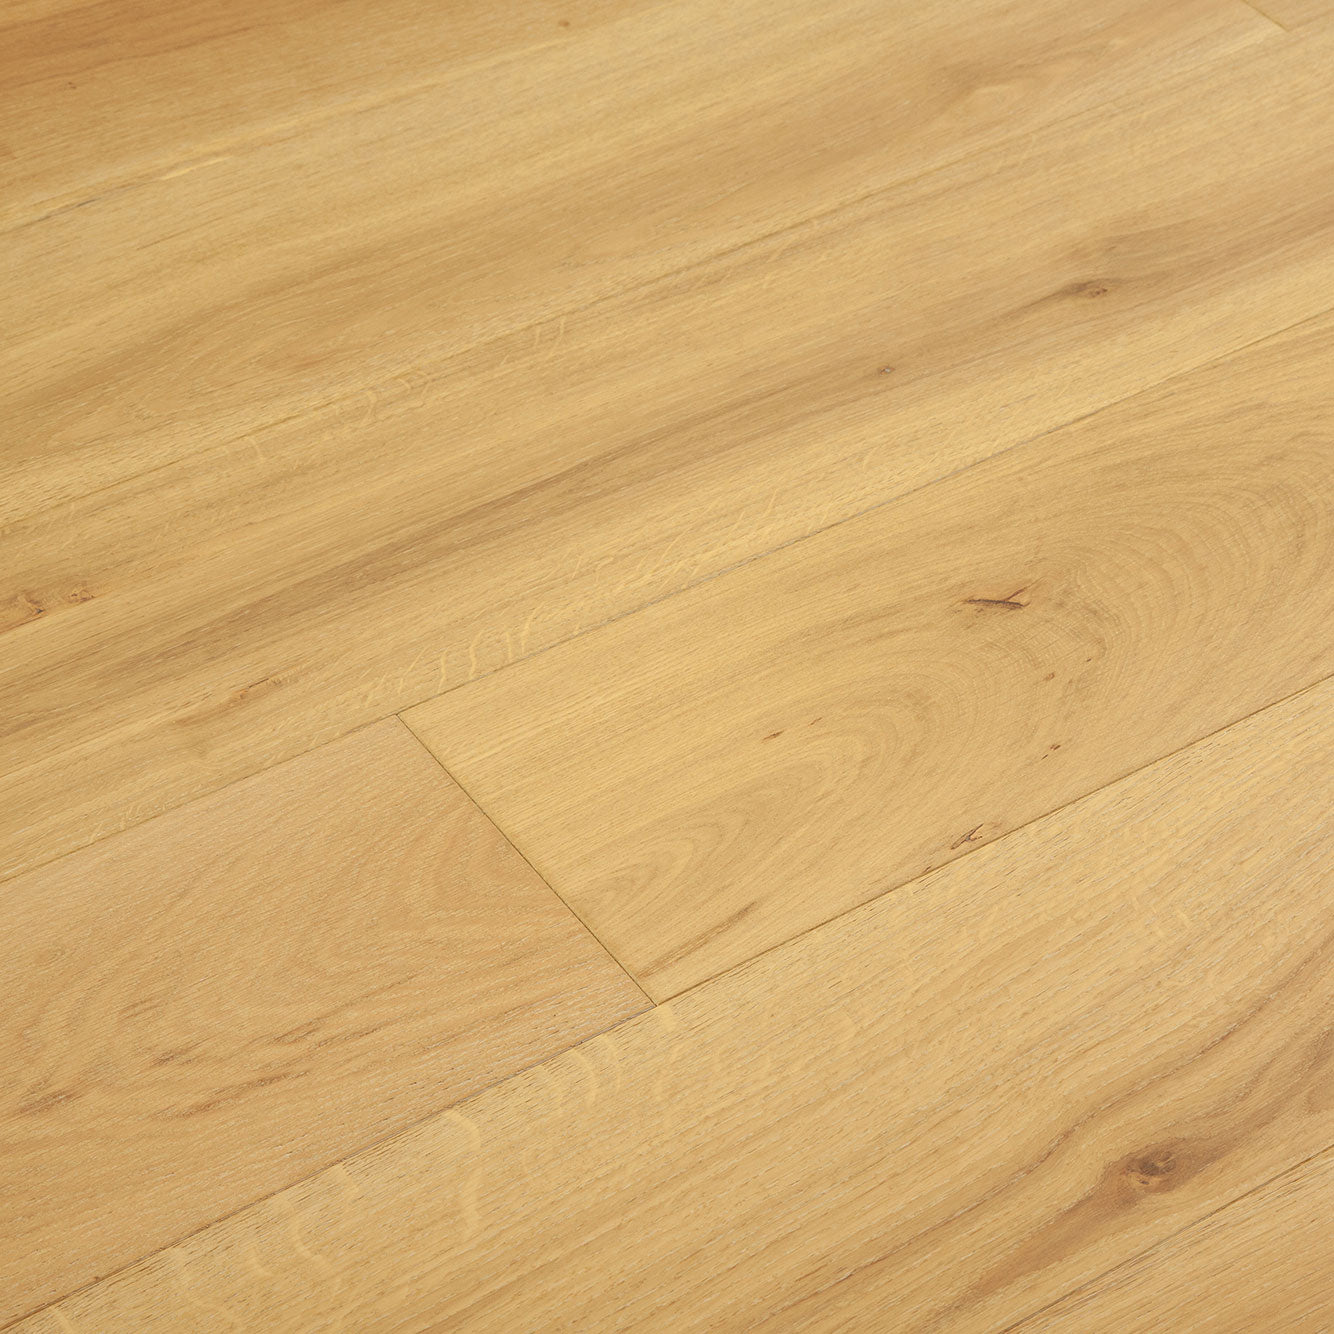 LongHorn White Oak Engineered Hardwood Flooring